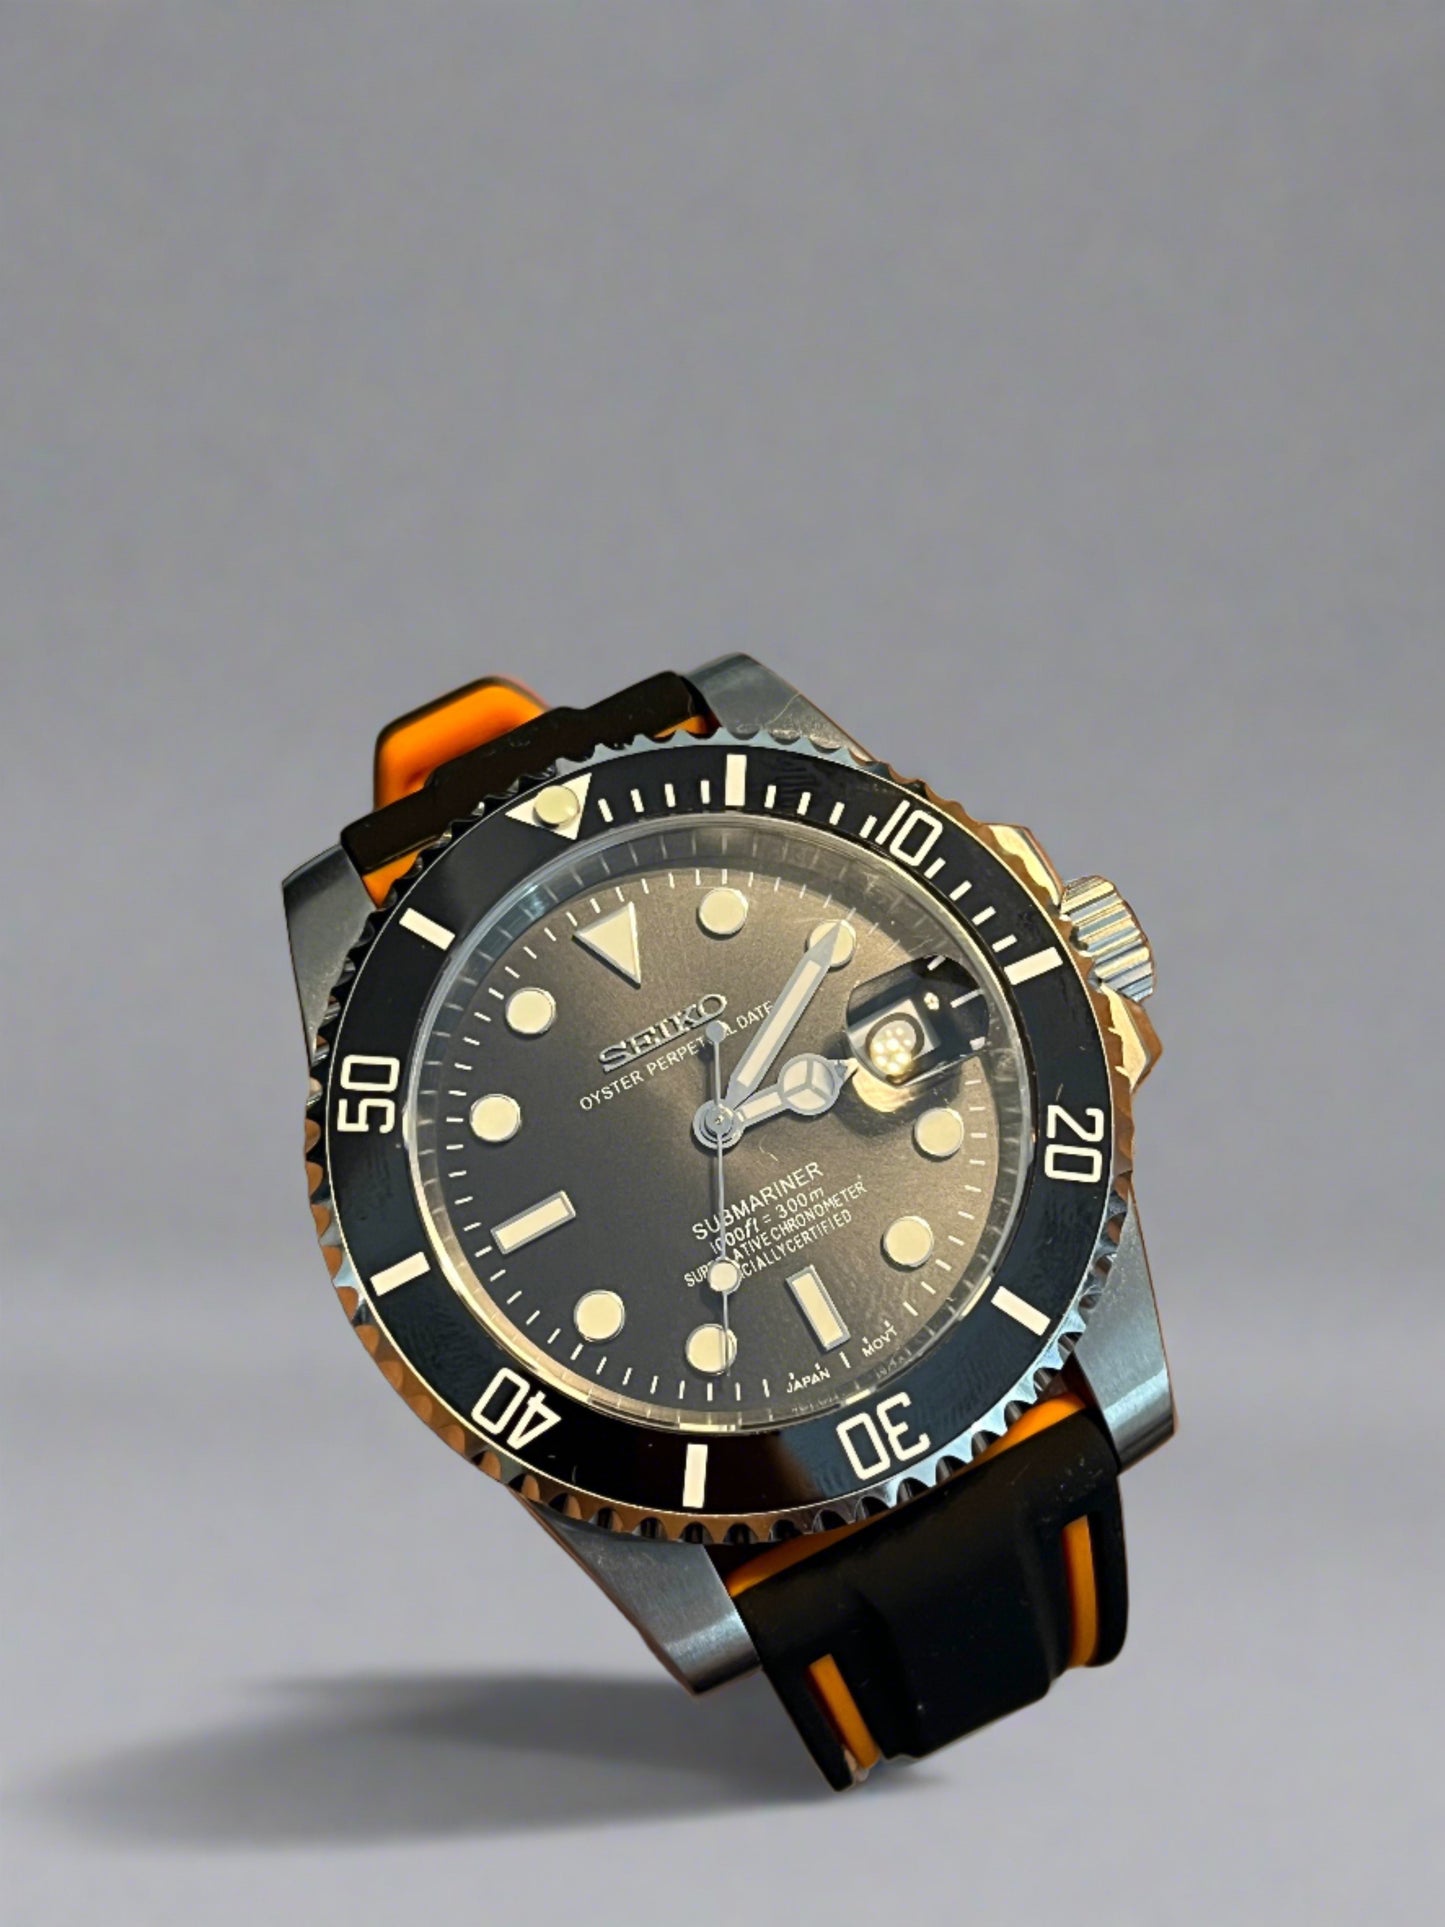 Seiko mod black submariner with orange rubber strap automatic watch